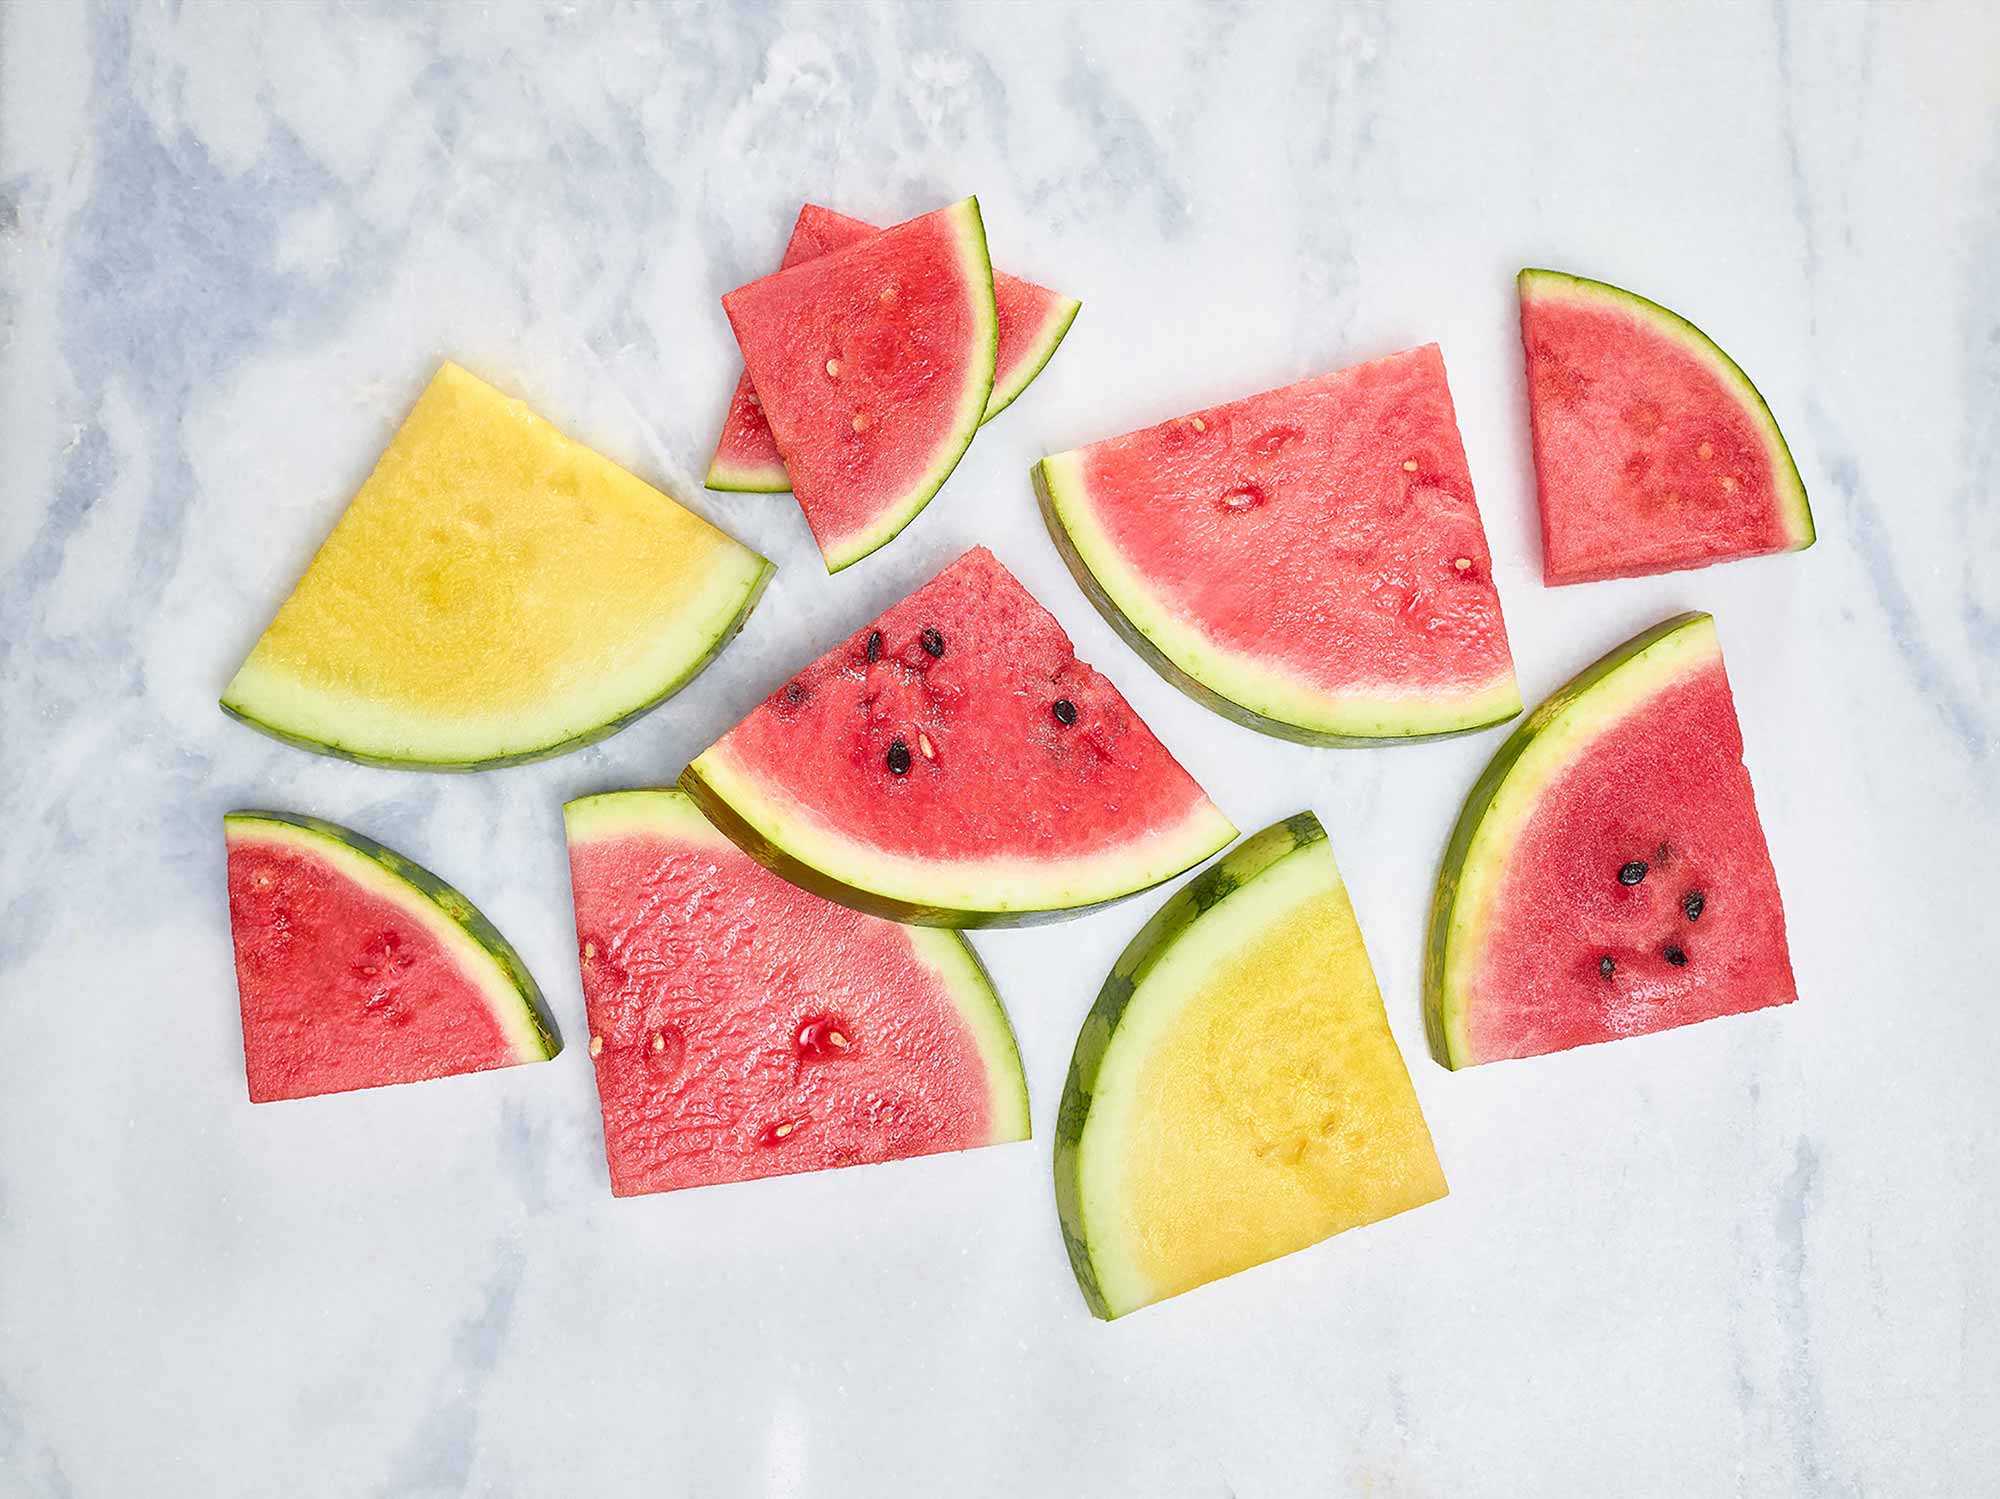 Watermelon board capitalizes on digital tactics